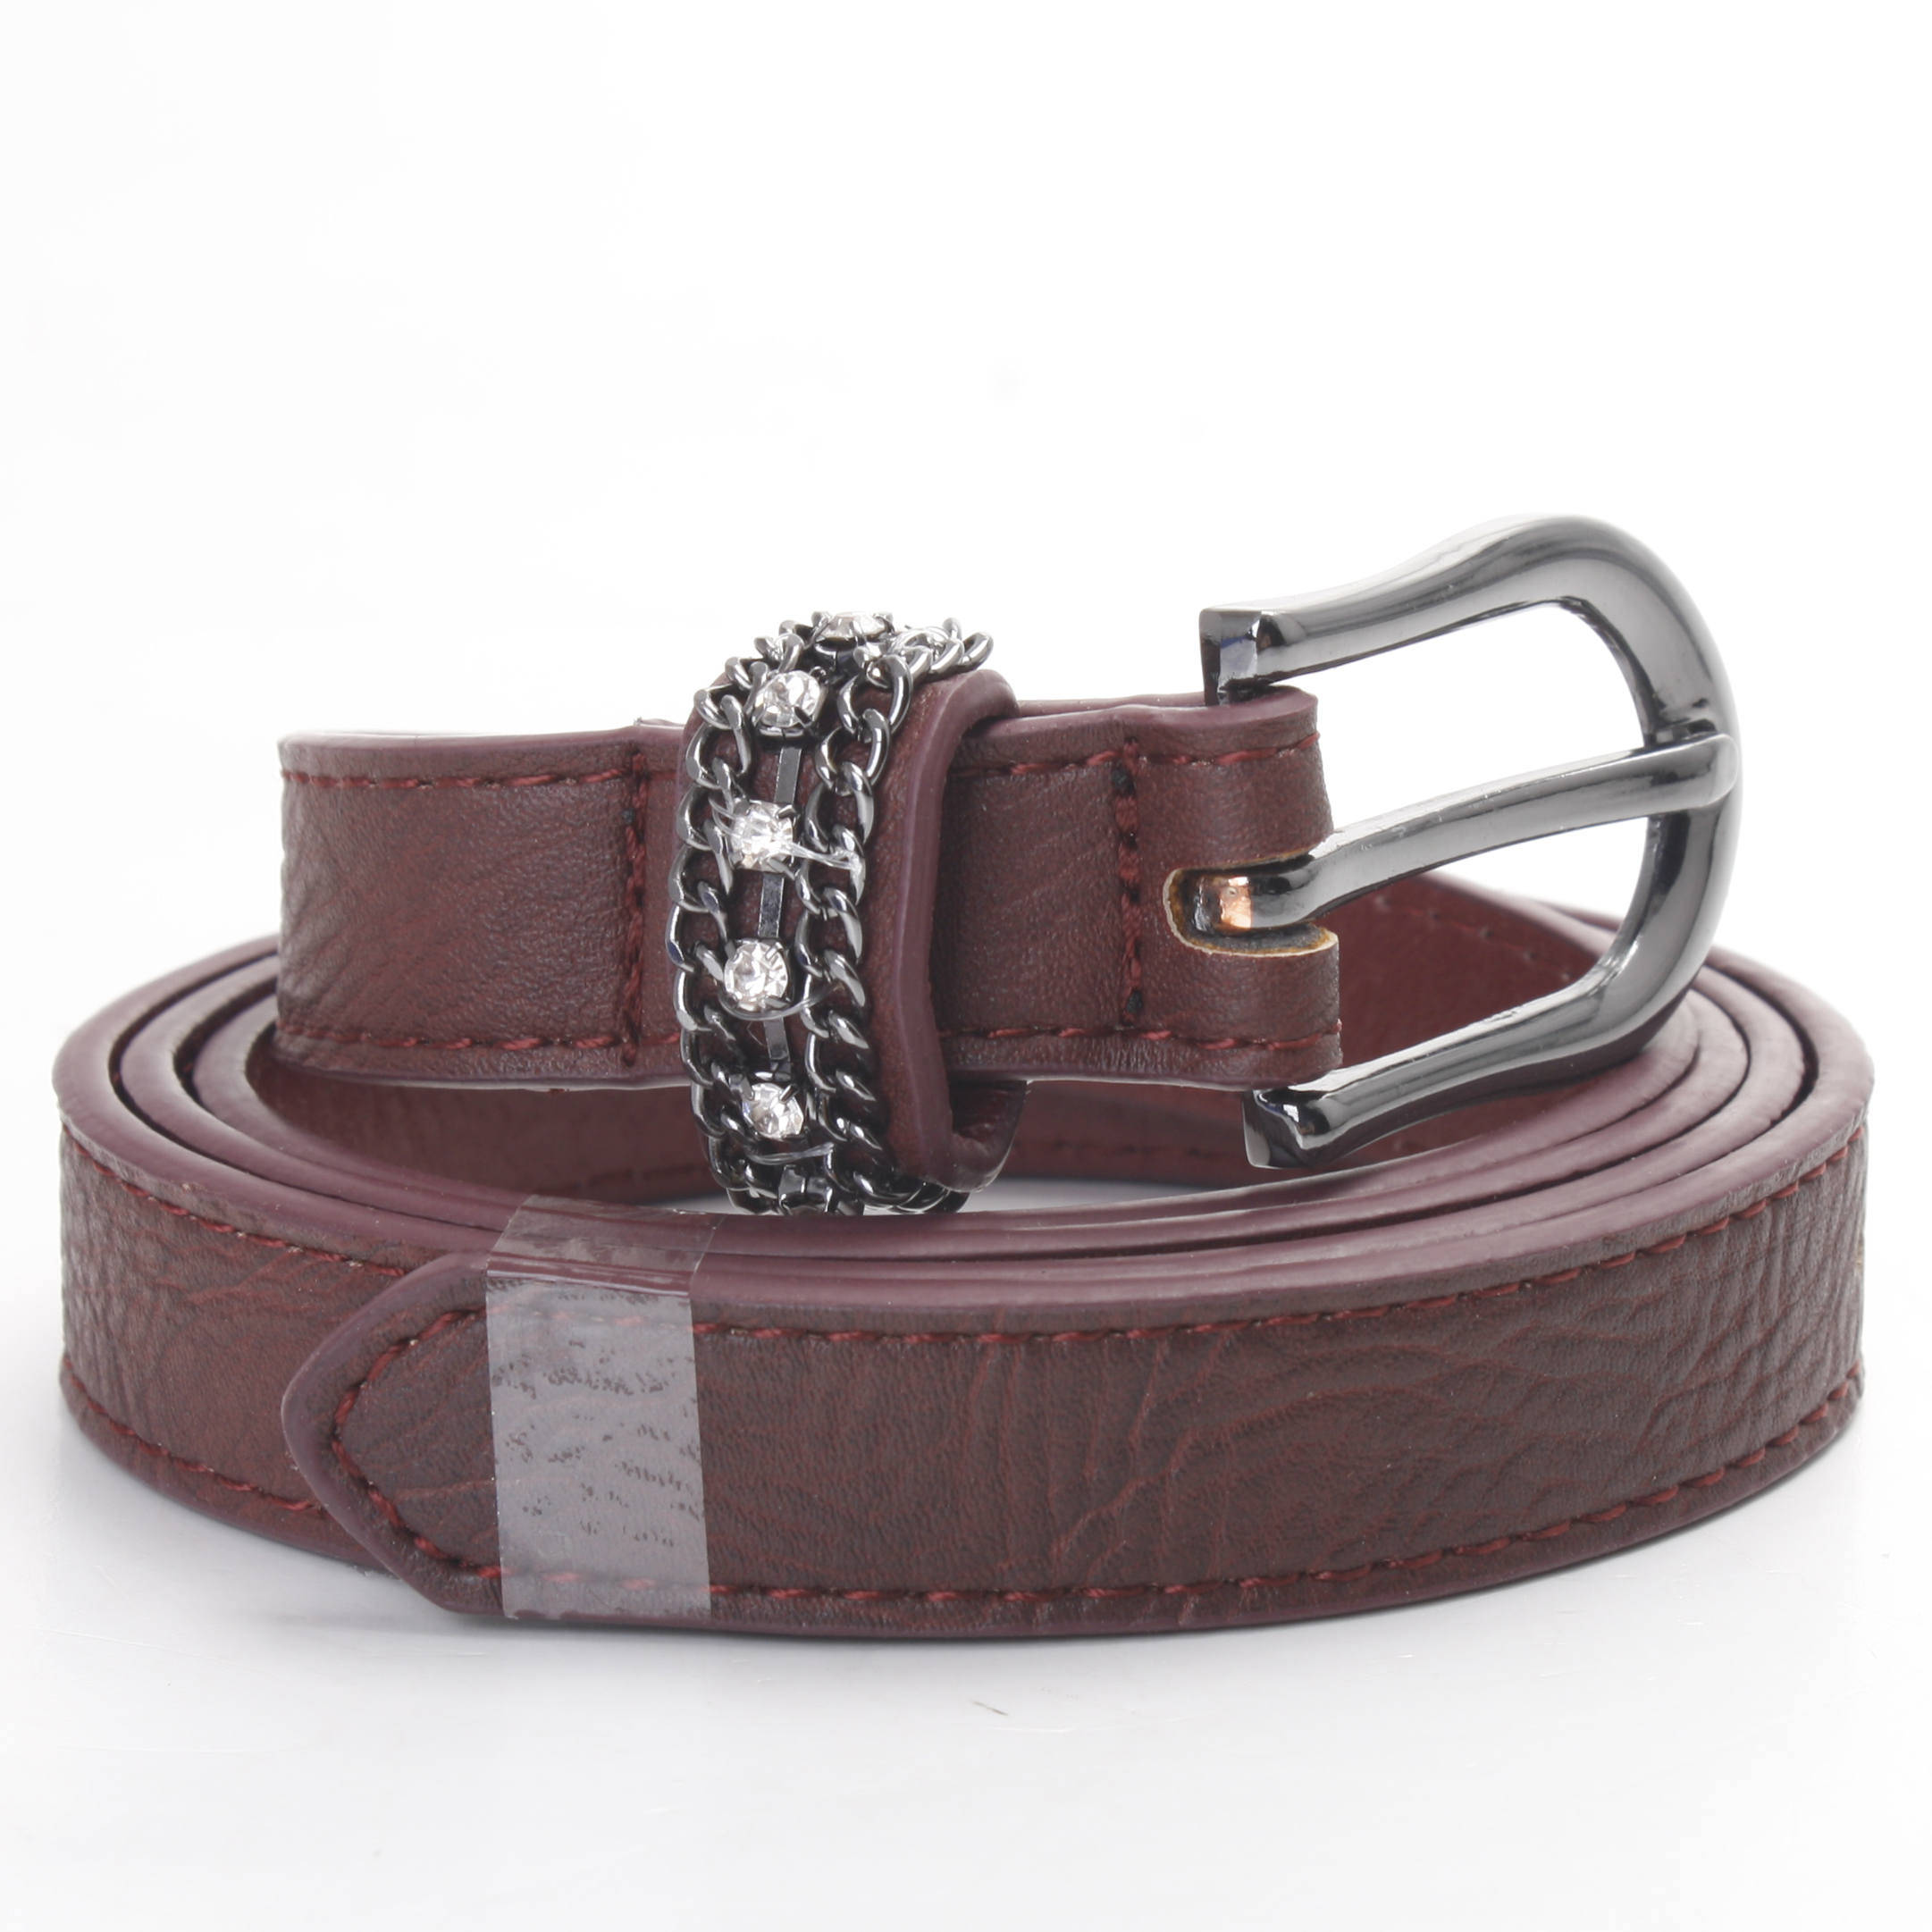 2015 Fashion Woman Latest Design PU Leather Belt with Chain